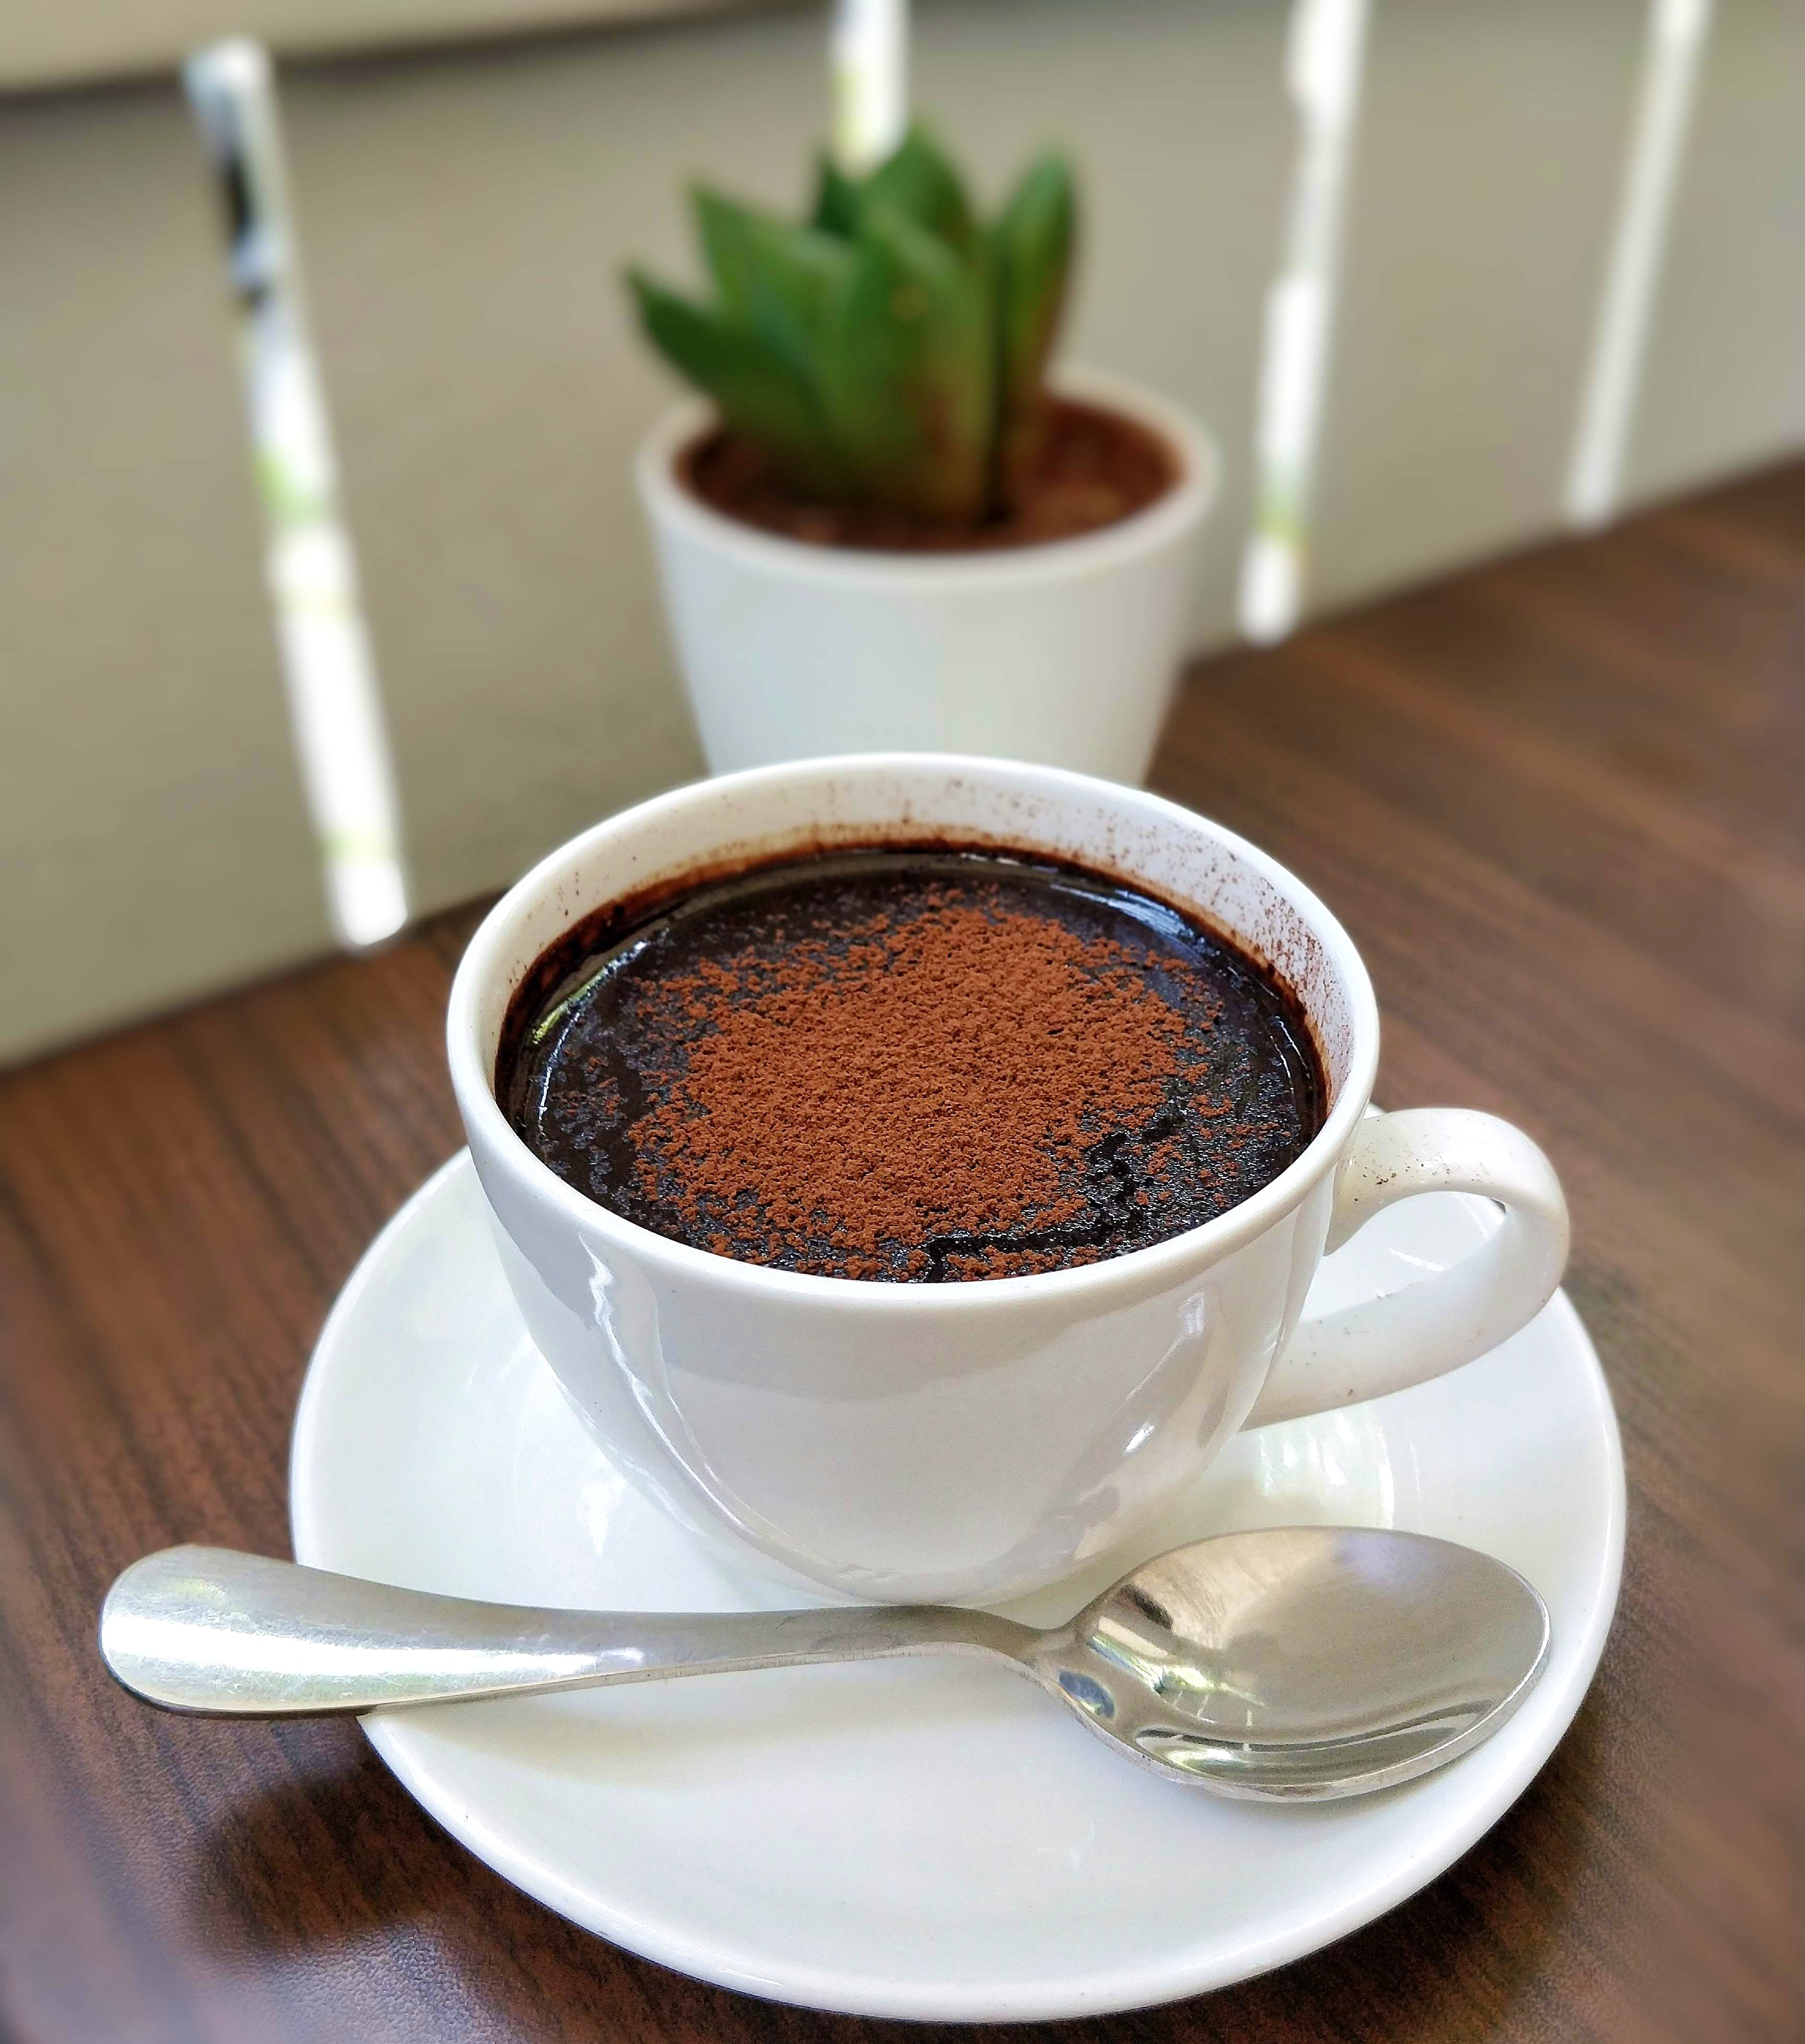 Cup,Coffee cup,Cup,Food,Coffee,Turkish coffee,Drink,Espresso,Caffeine,Dish